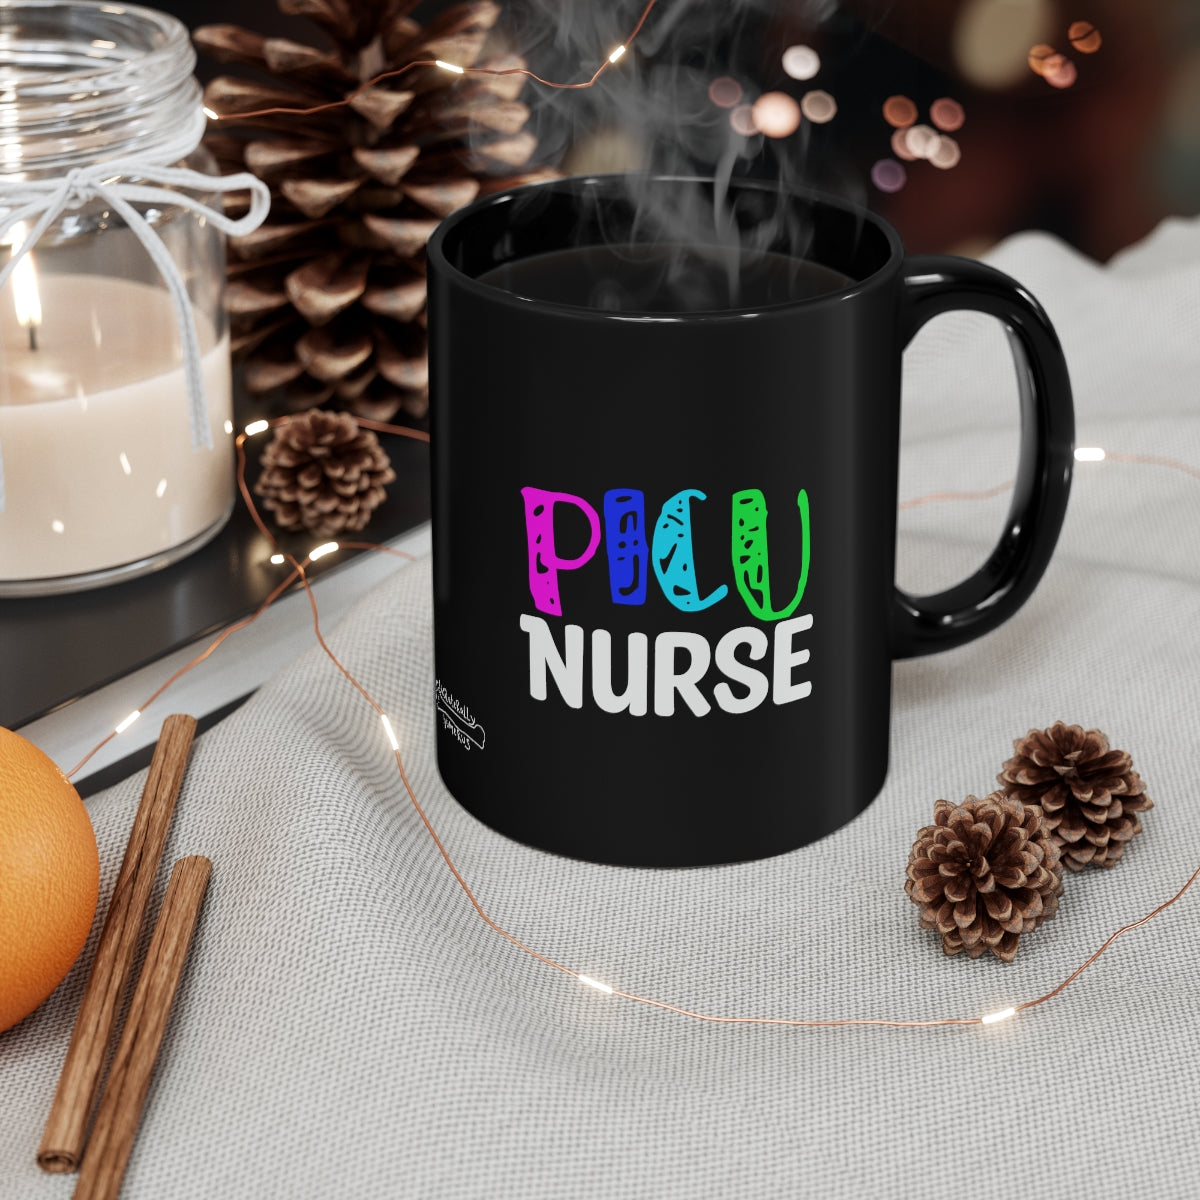 PICU Nurse 11oz Black Mug